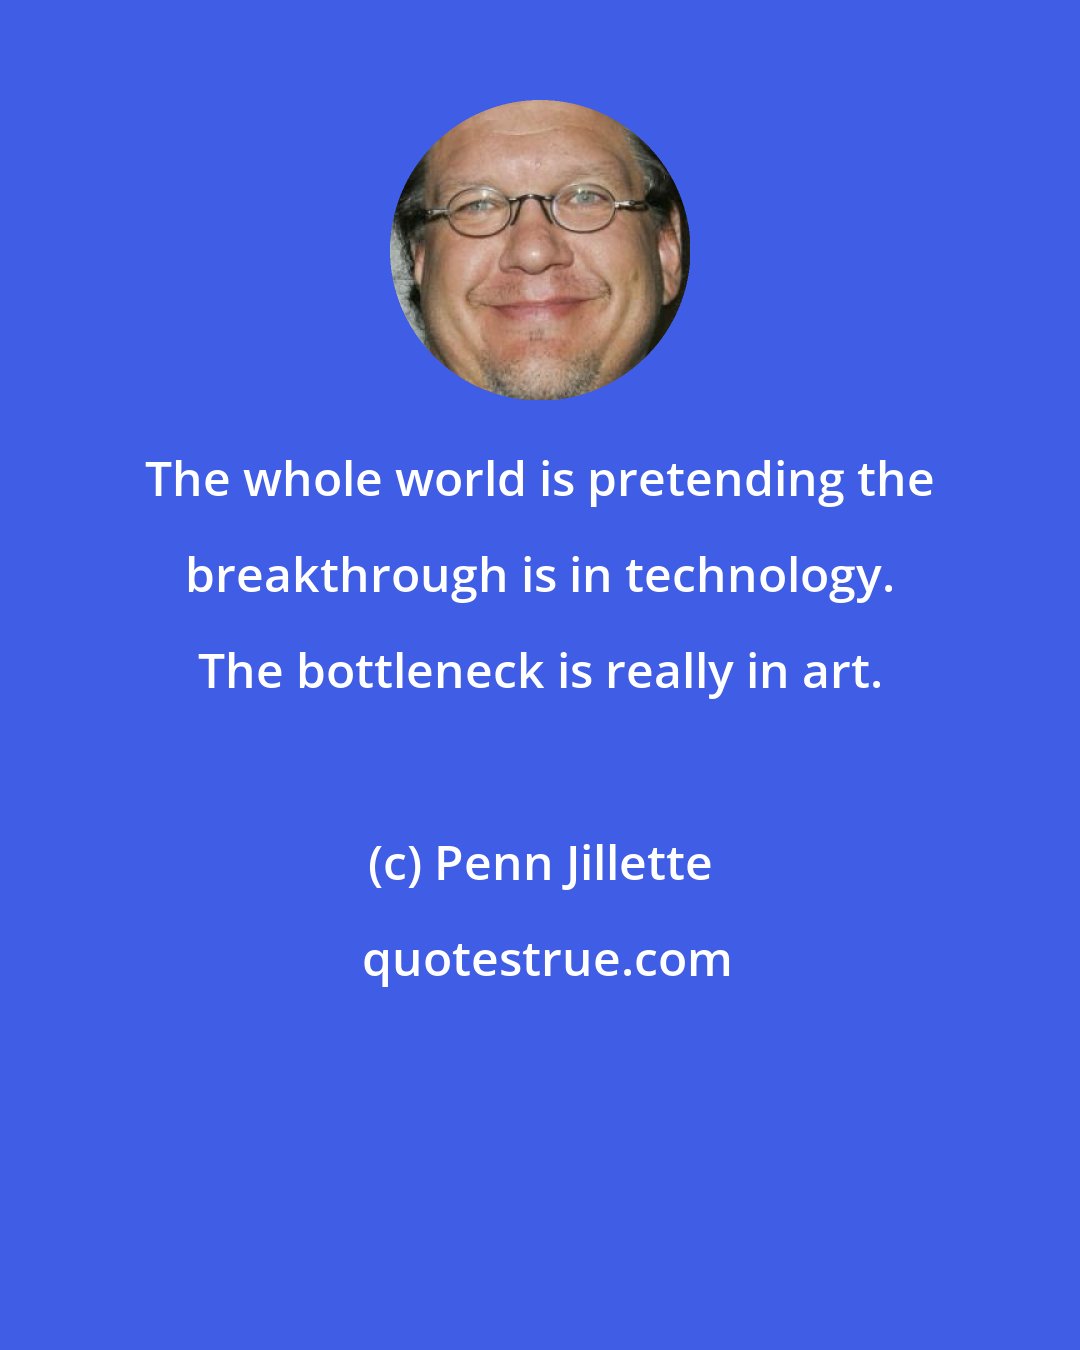 Penn Jillette: The whole world is pretending the breakthrough is in technology. The bottleneck is really in art.